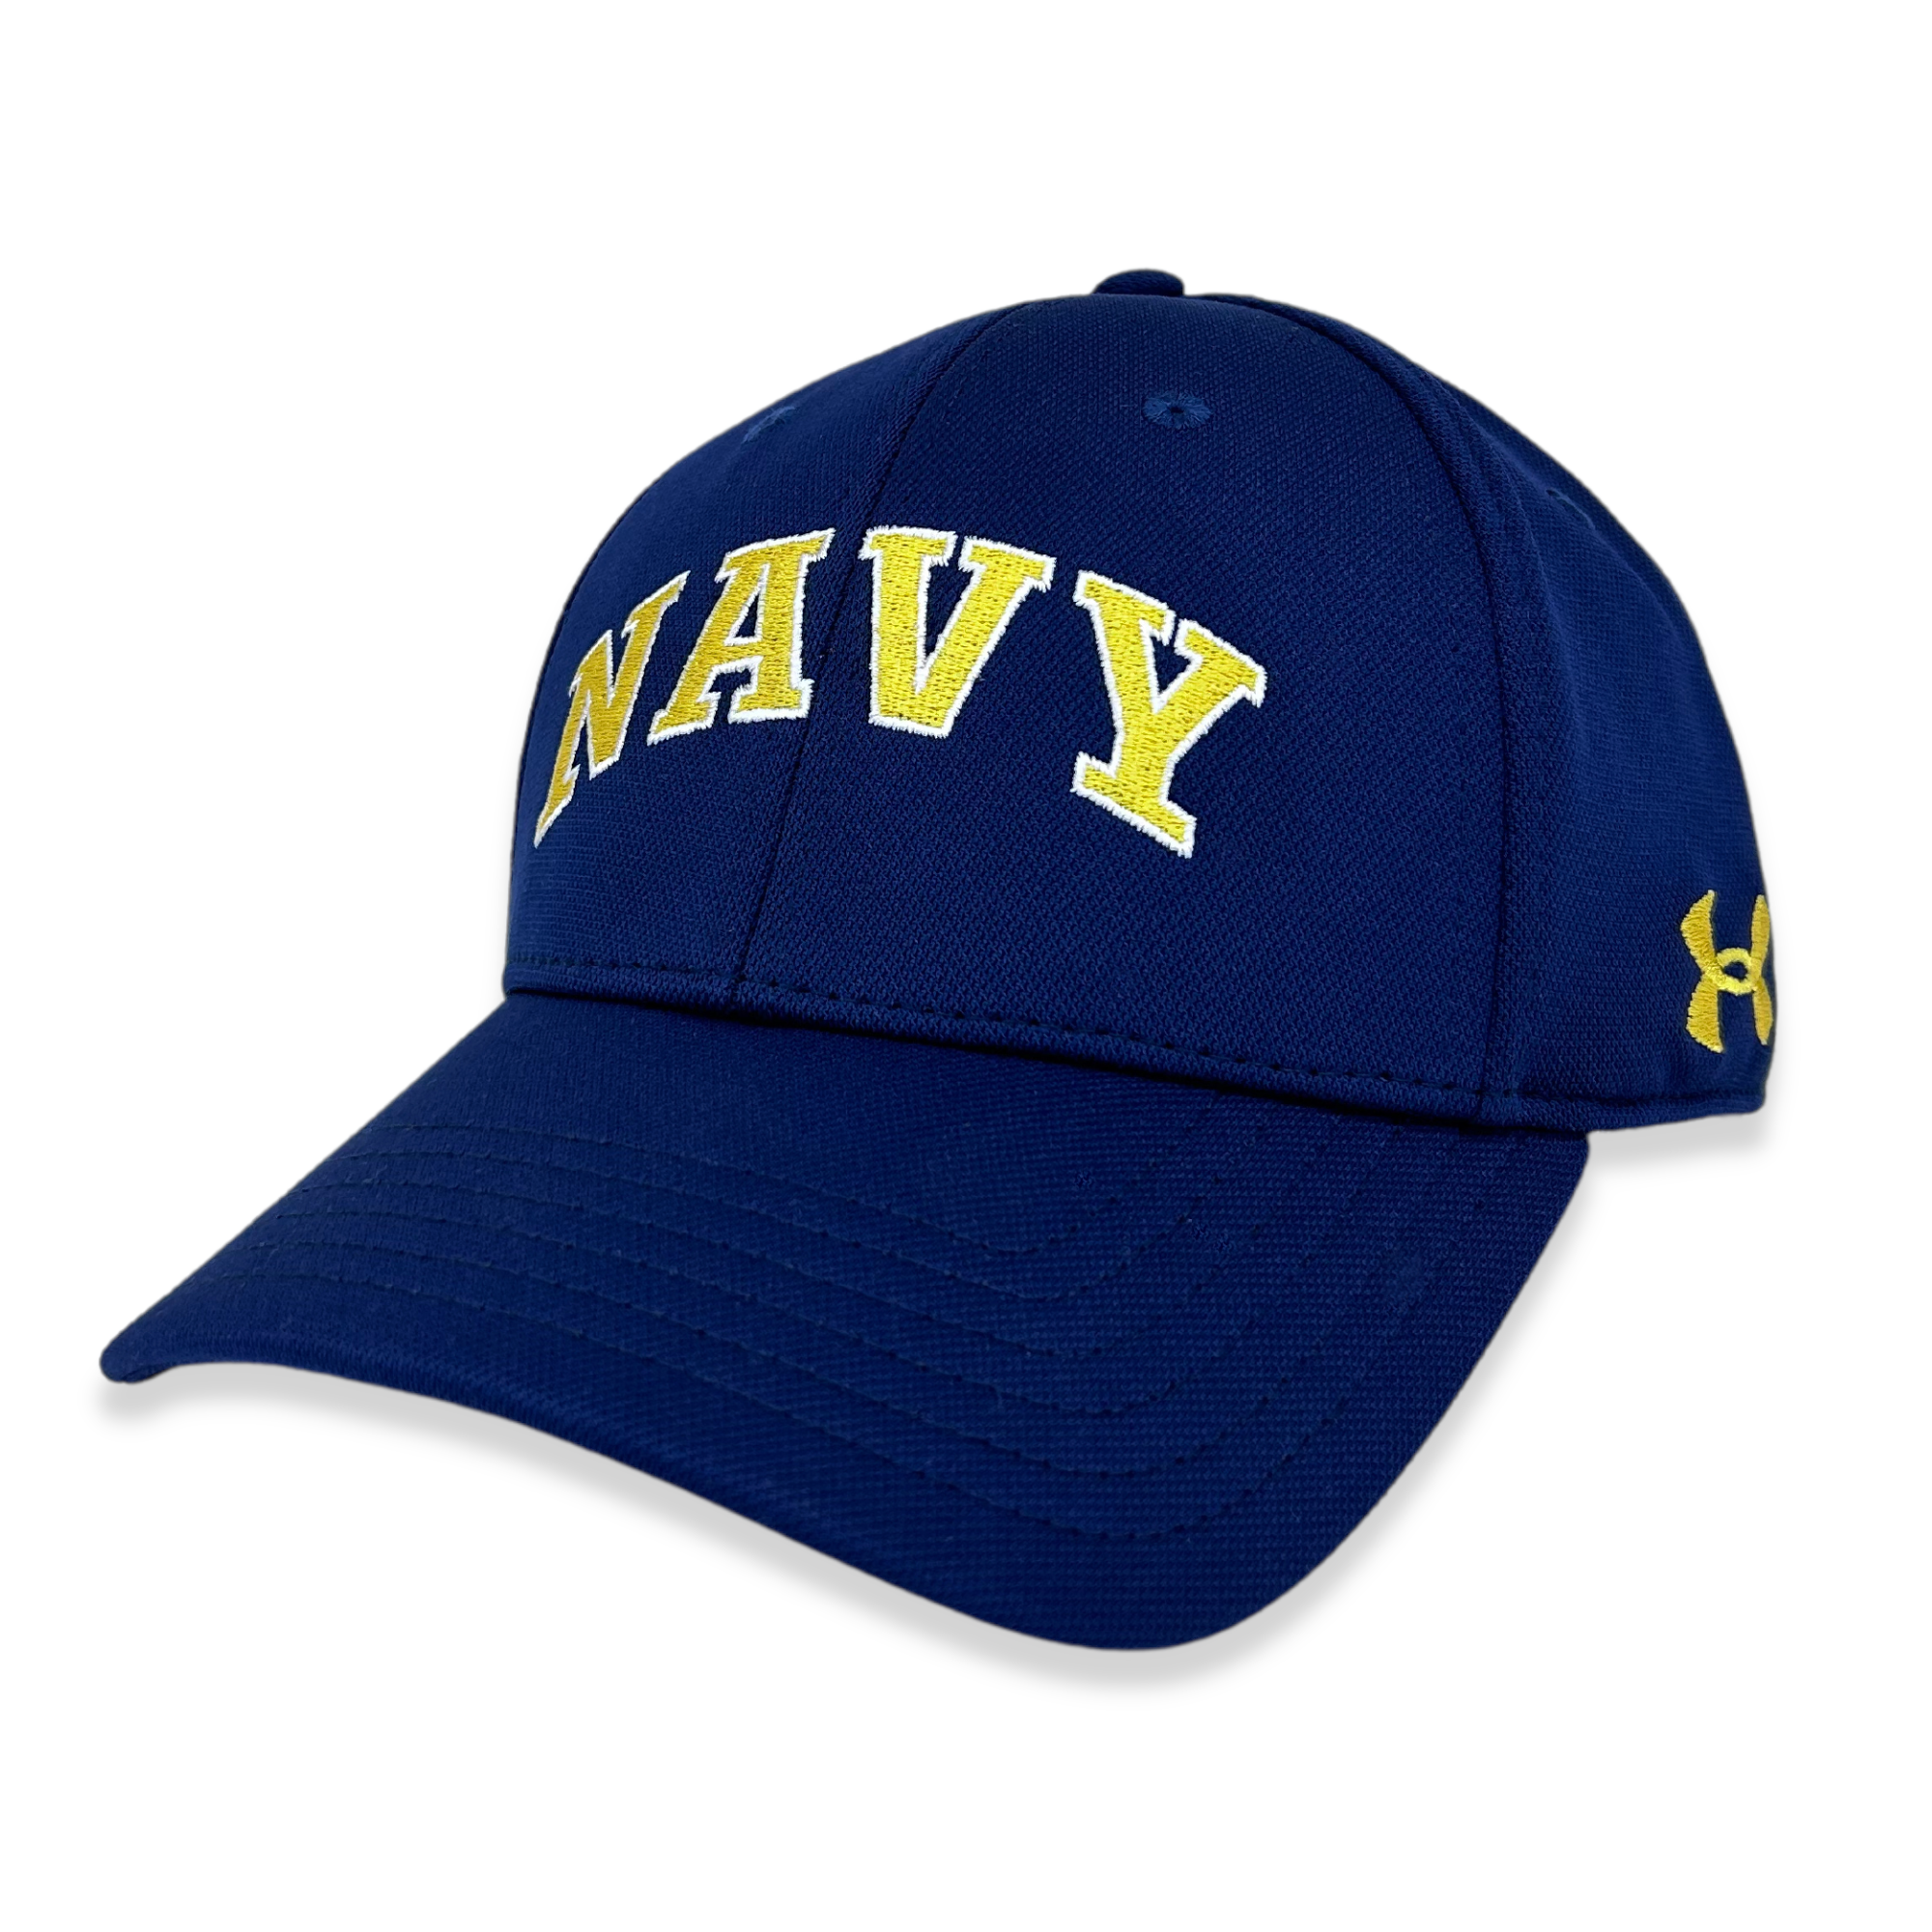 Flex Blitzing Navy Fit Armour Under (Navy) Hat